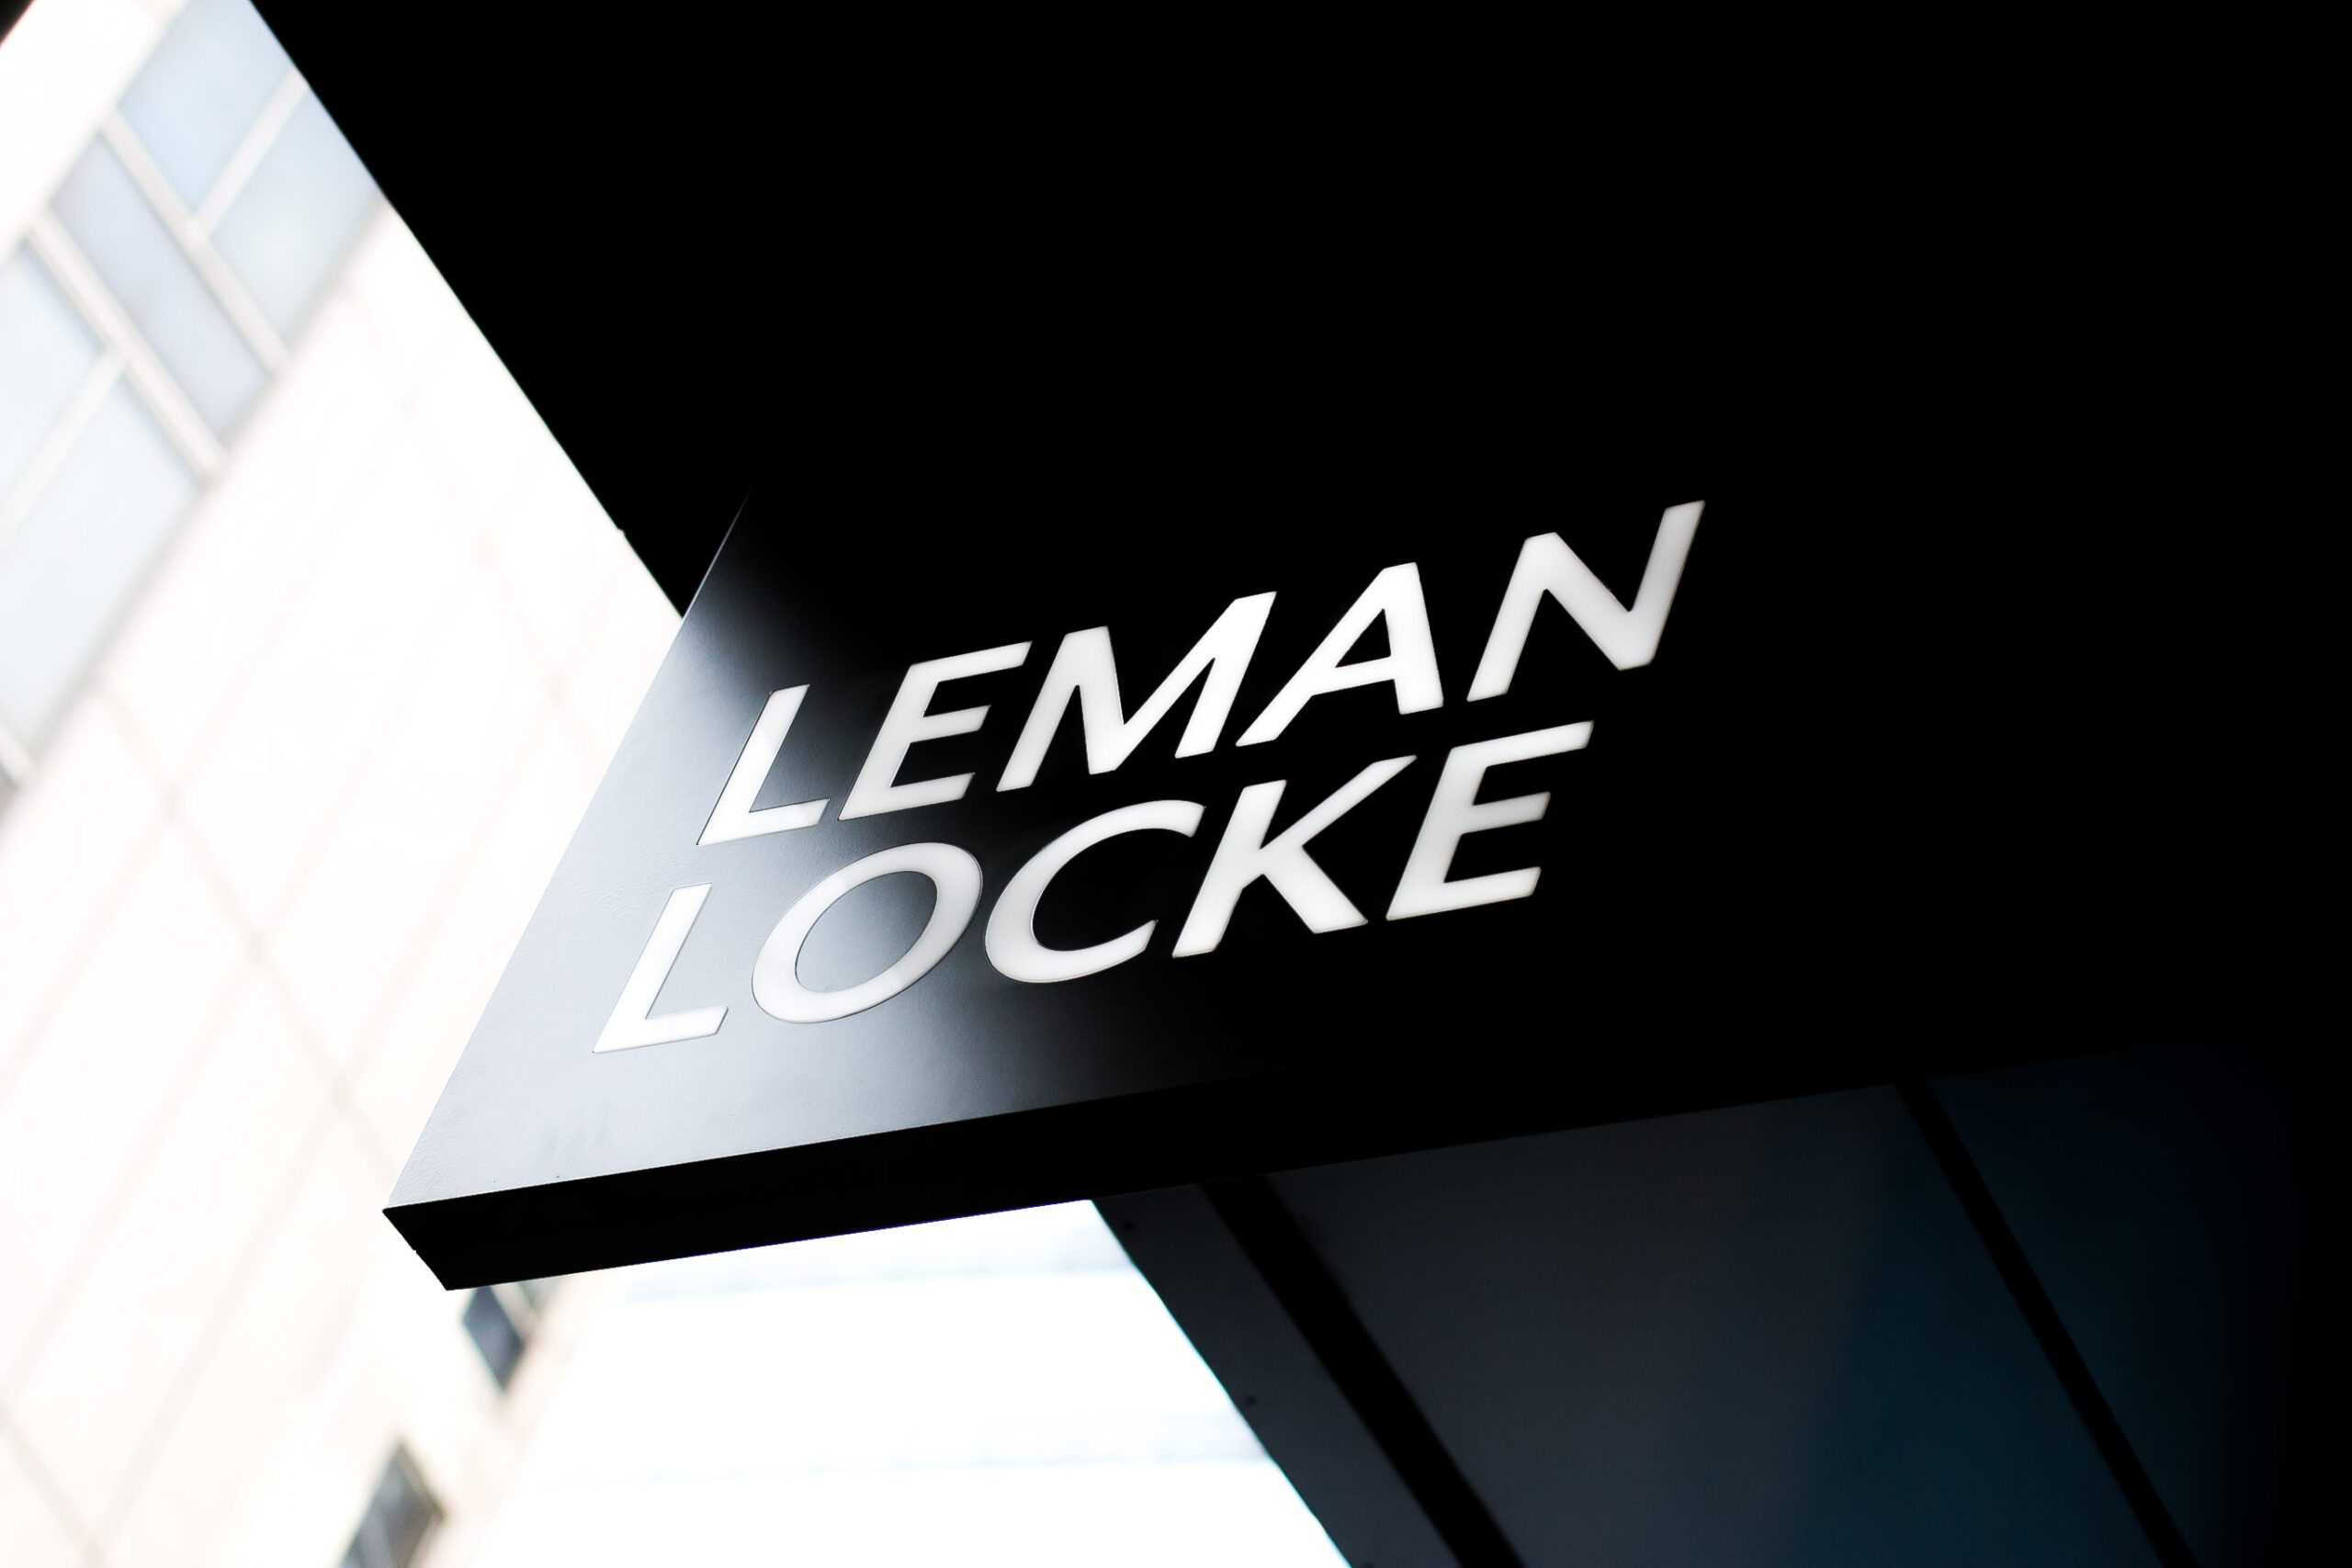 Jordan Taylor C - Exploring London with Leman Locke